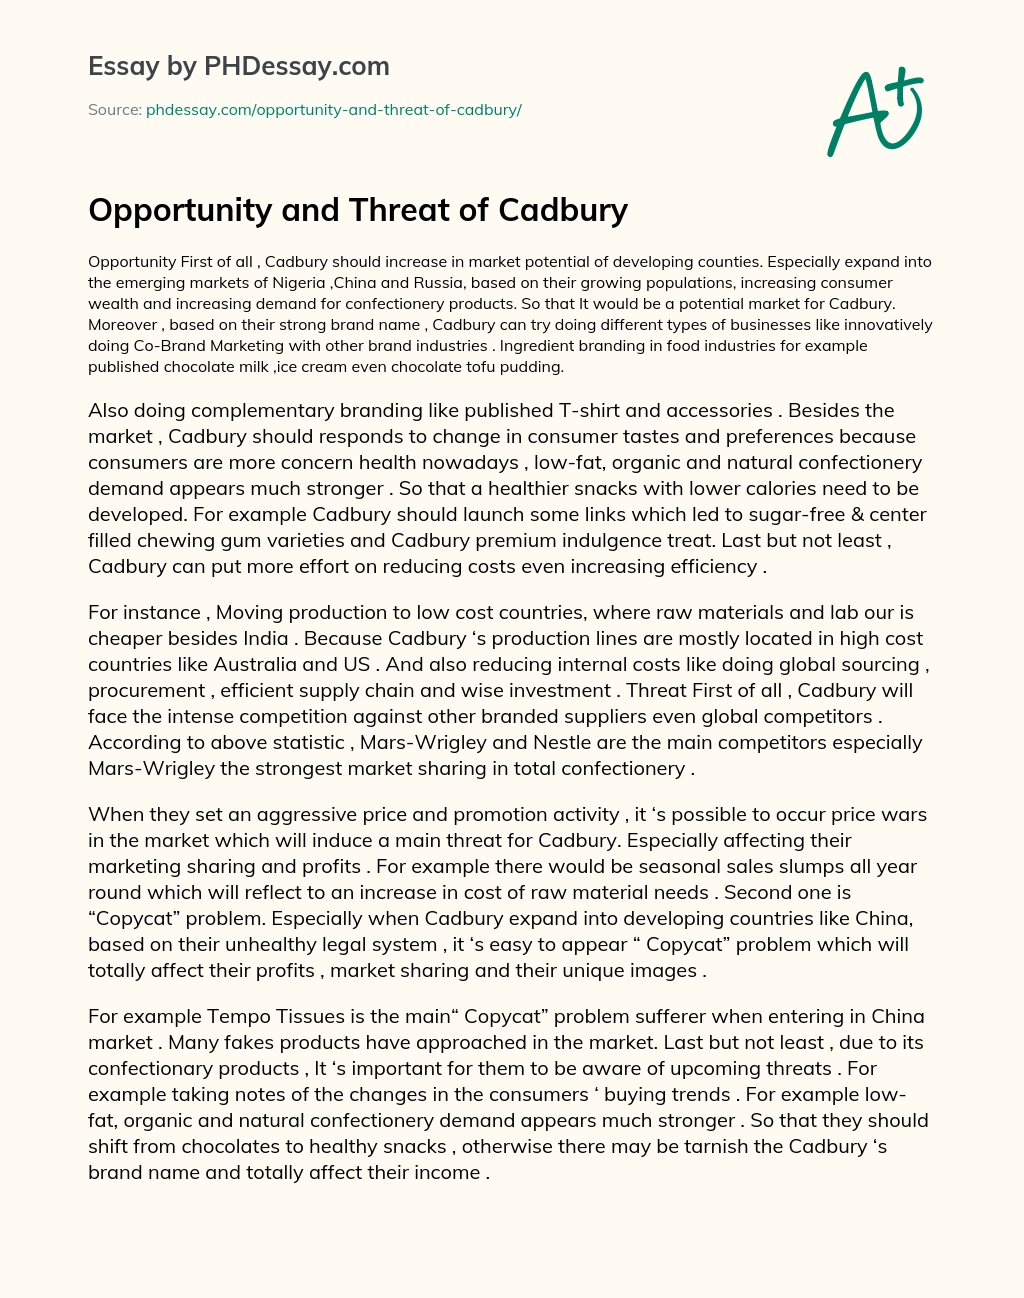 Opportunity and Threat of Cadbury essay